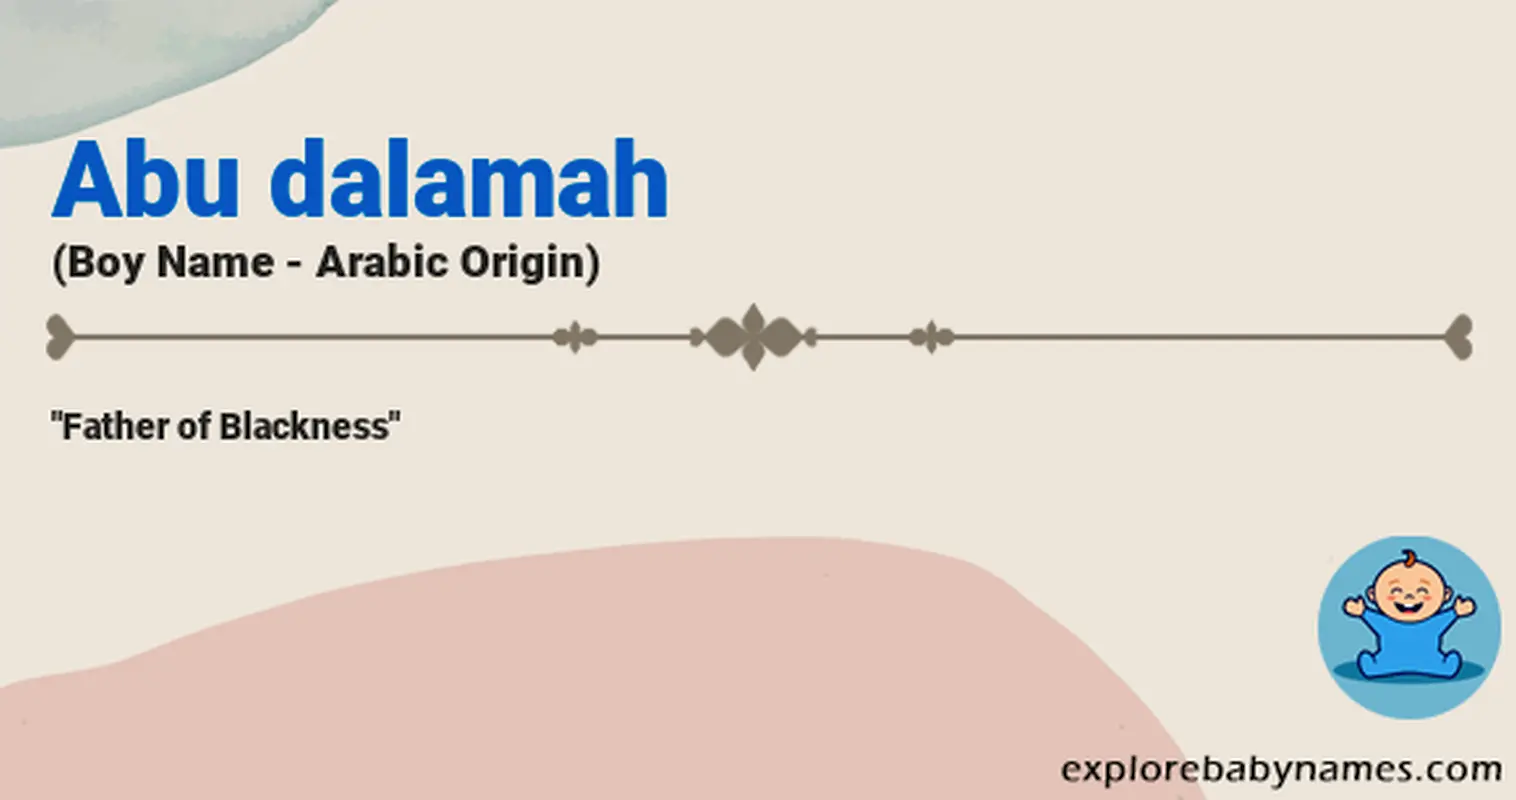 Meaning of Abu dalamah